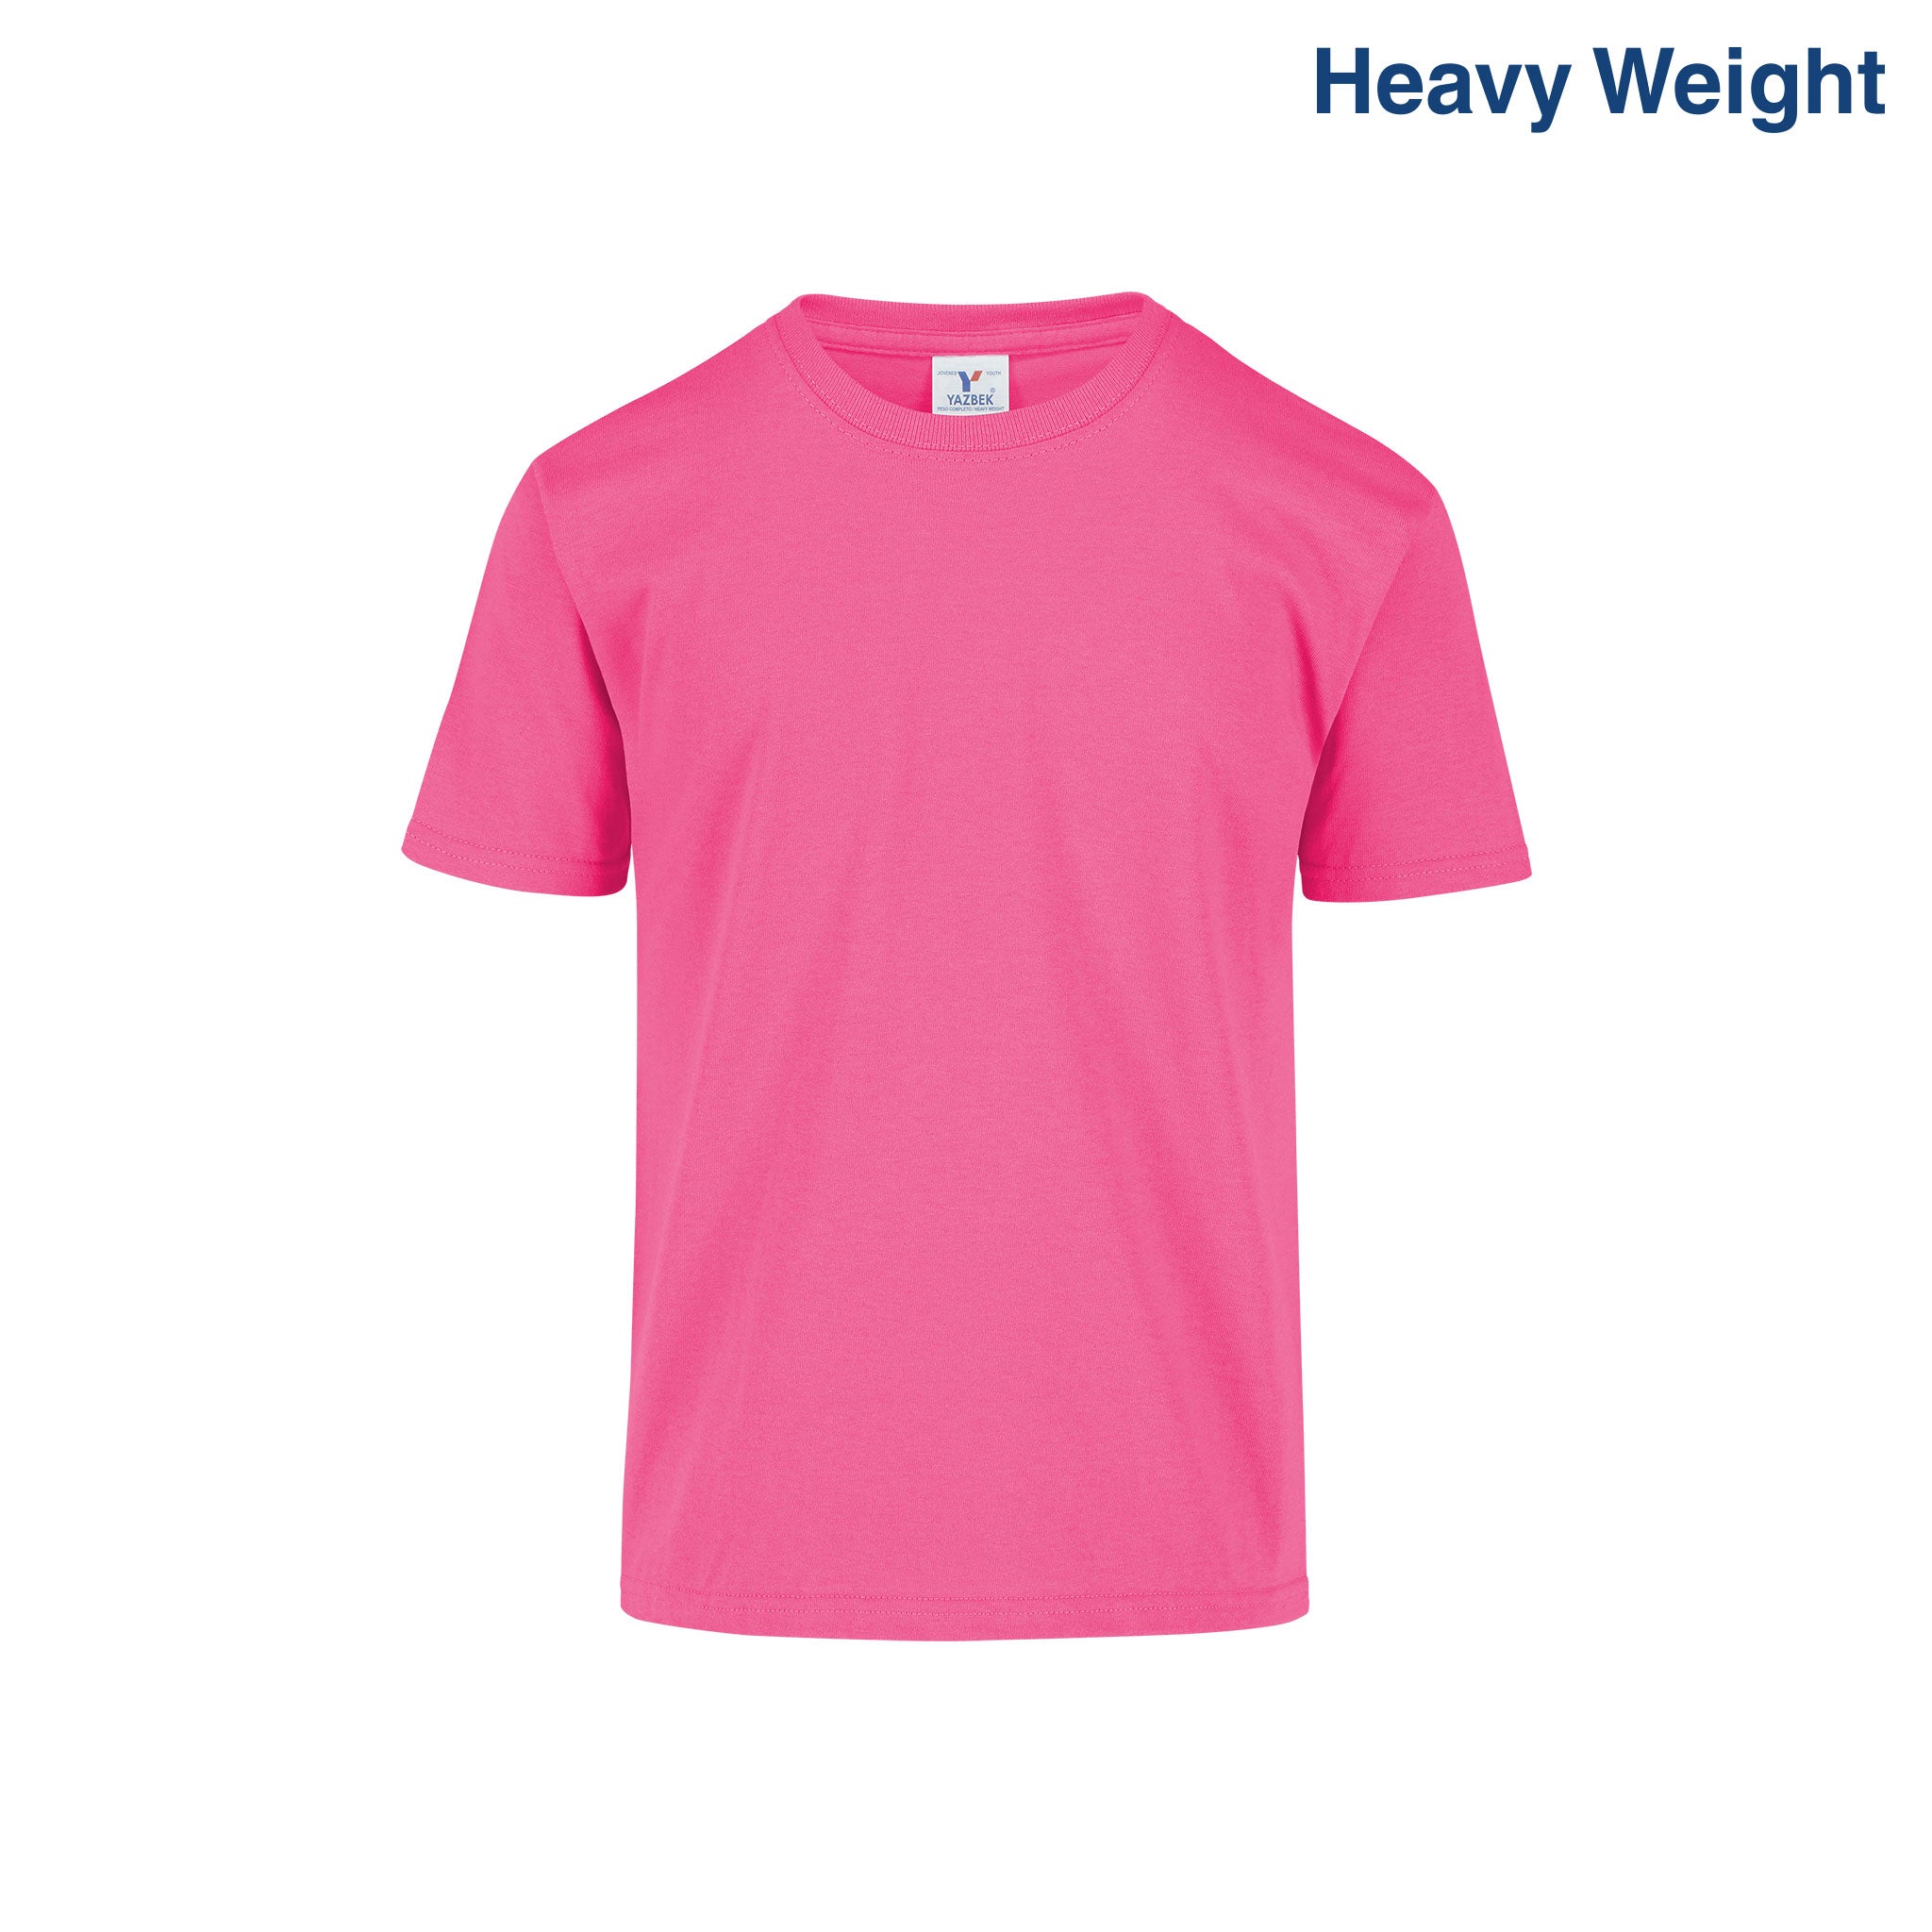 Girls Pink Puff Sleeve Blank Shirt, Embroidery Blank Shirt, Custom Youth 6 Shirt  Blank, Heat Transfer Blank, Wholesale Blanks 